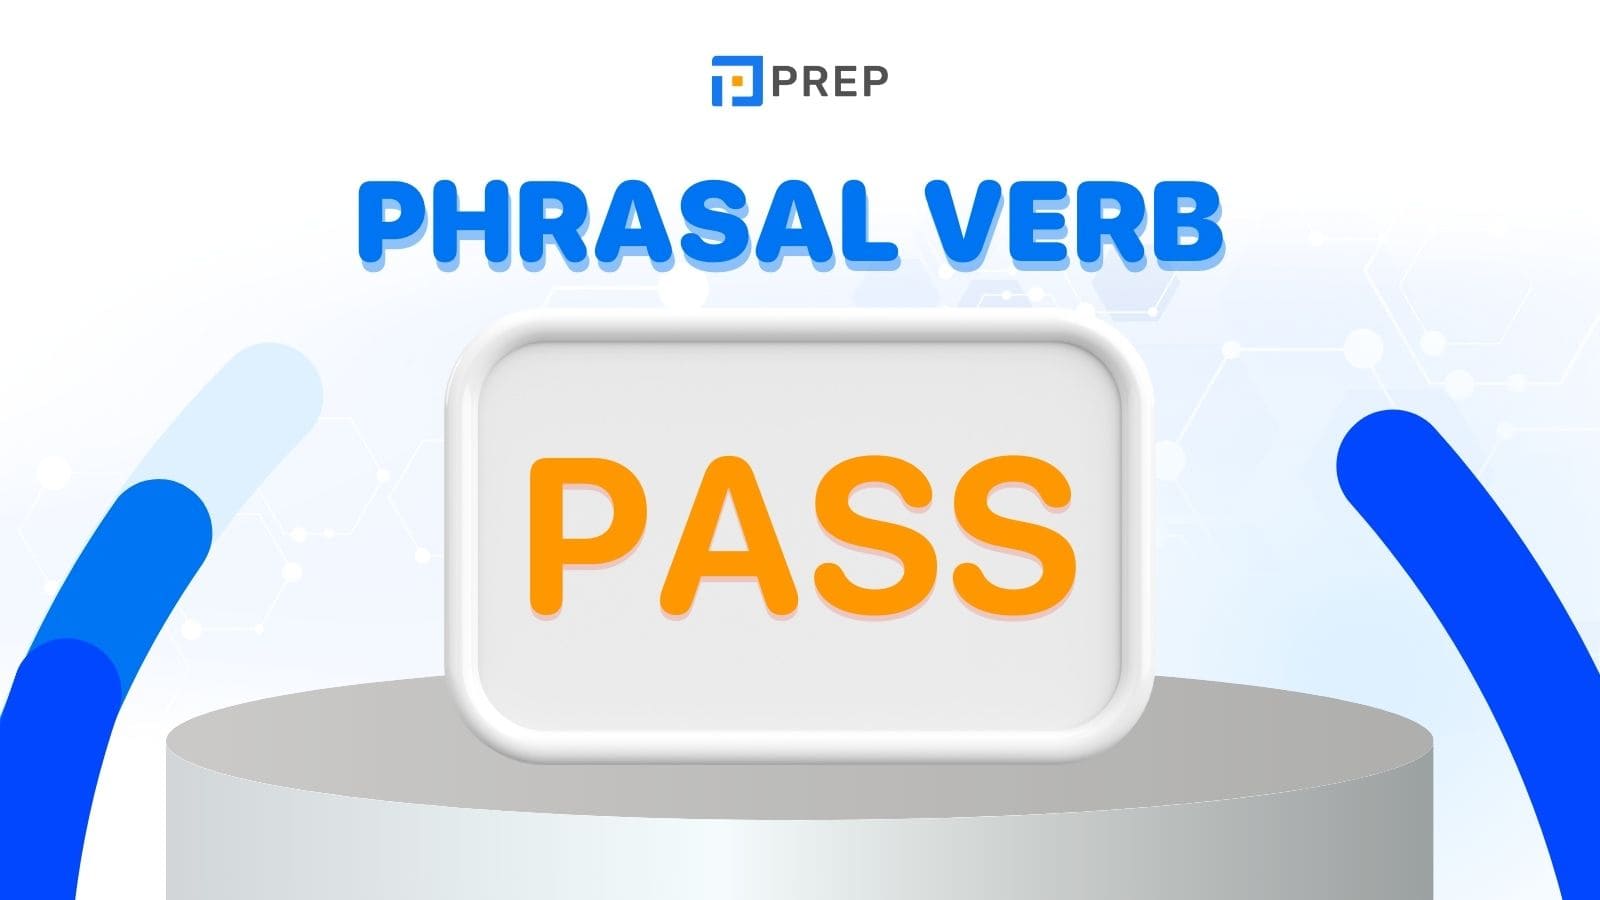 phrasal-verb-pass.jpg